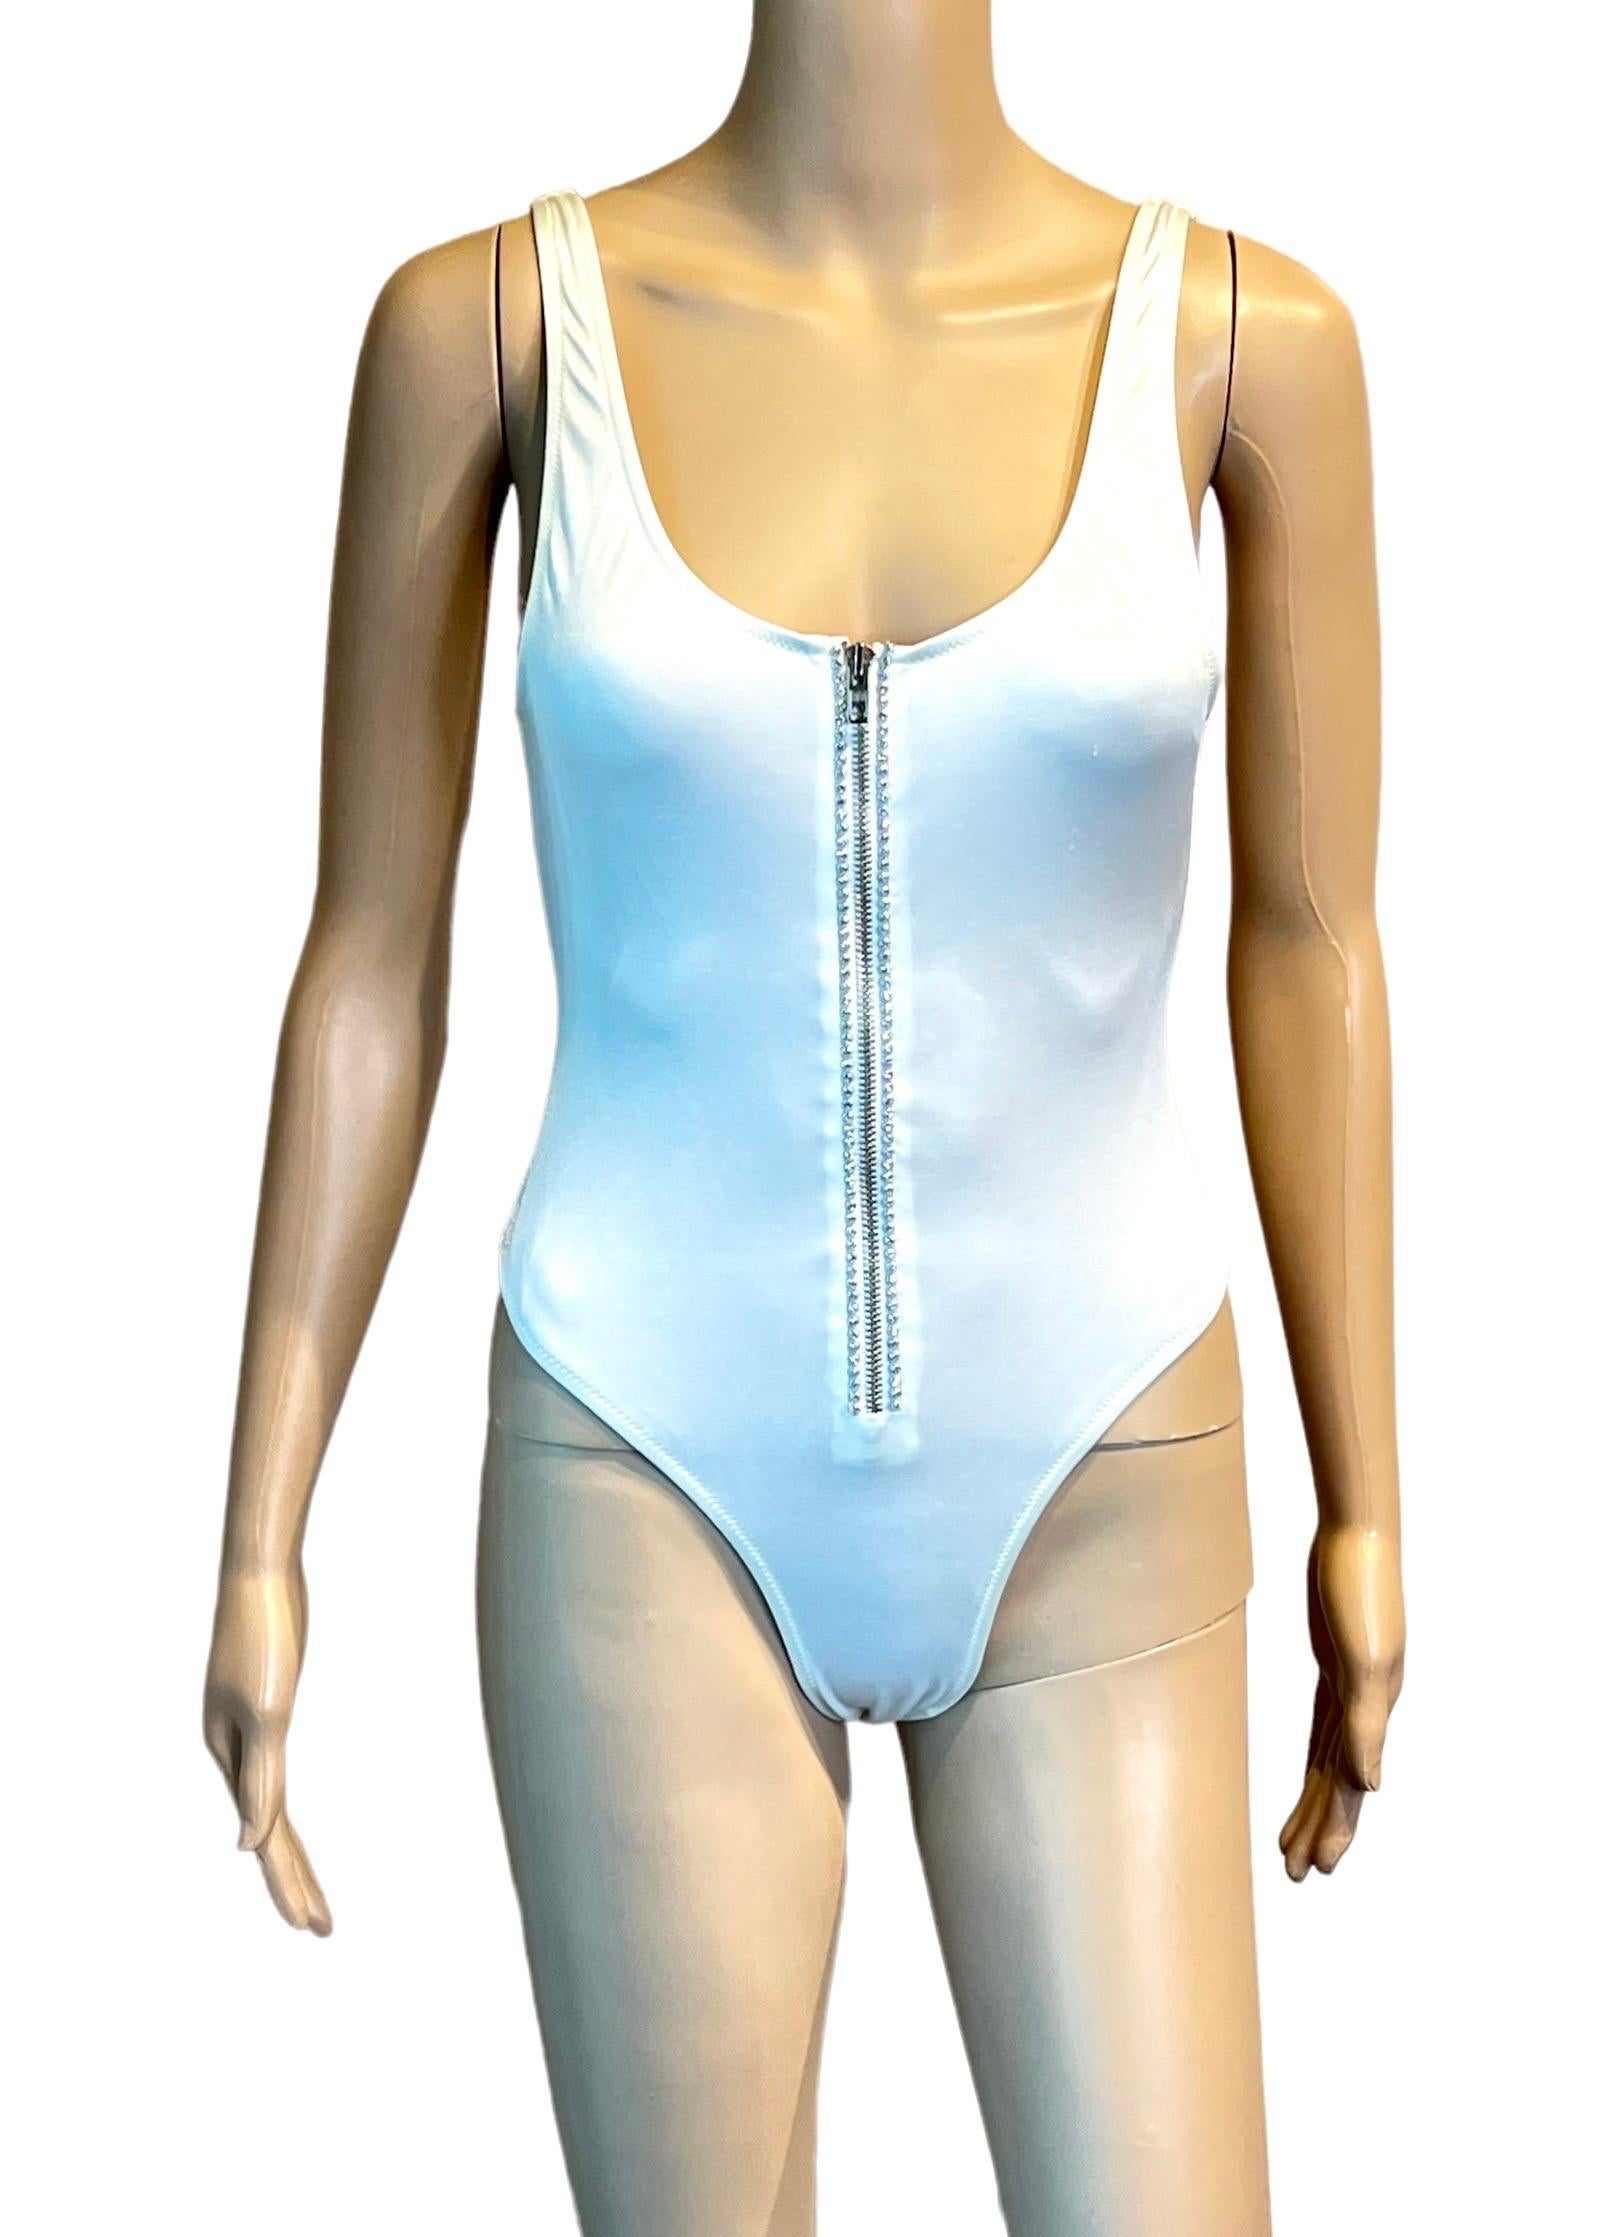 Gray Gianni Versace S/S 1996 Vintage Crystal Zipper White Bodysuit Swimwear Swimsuit For Sale